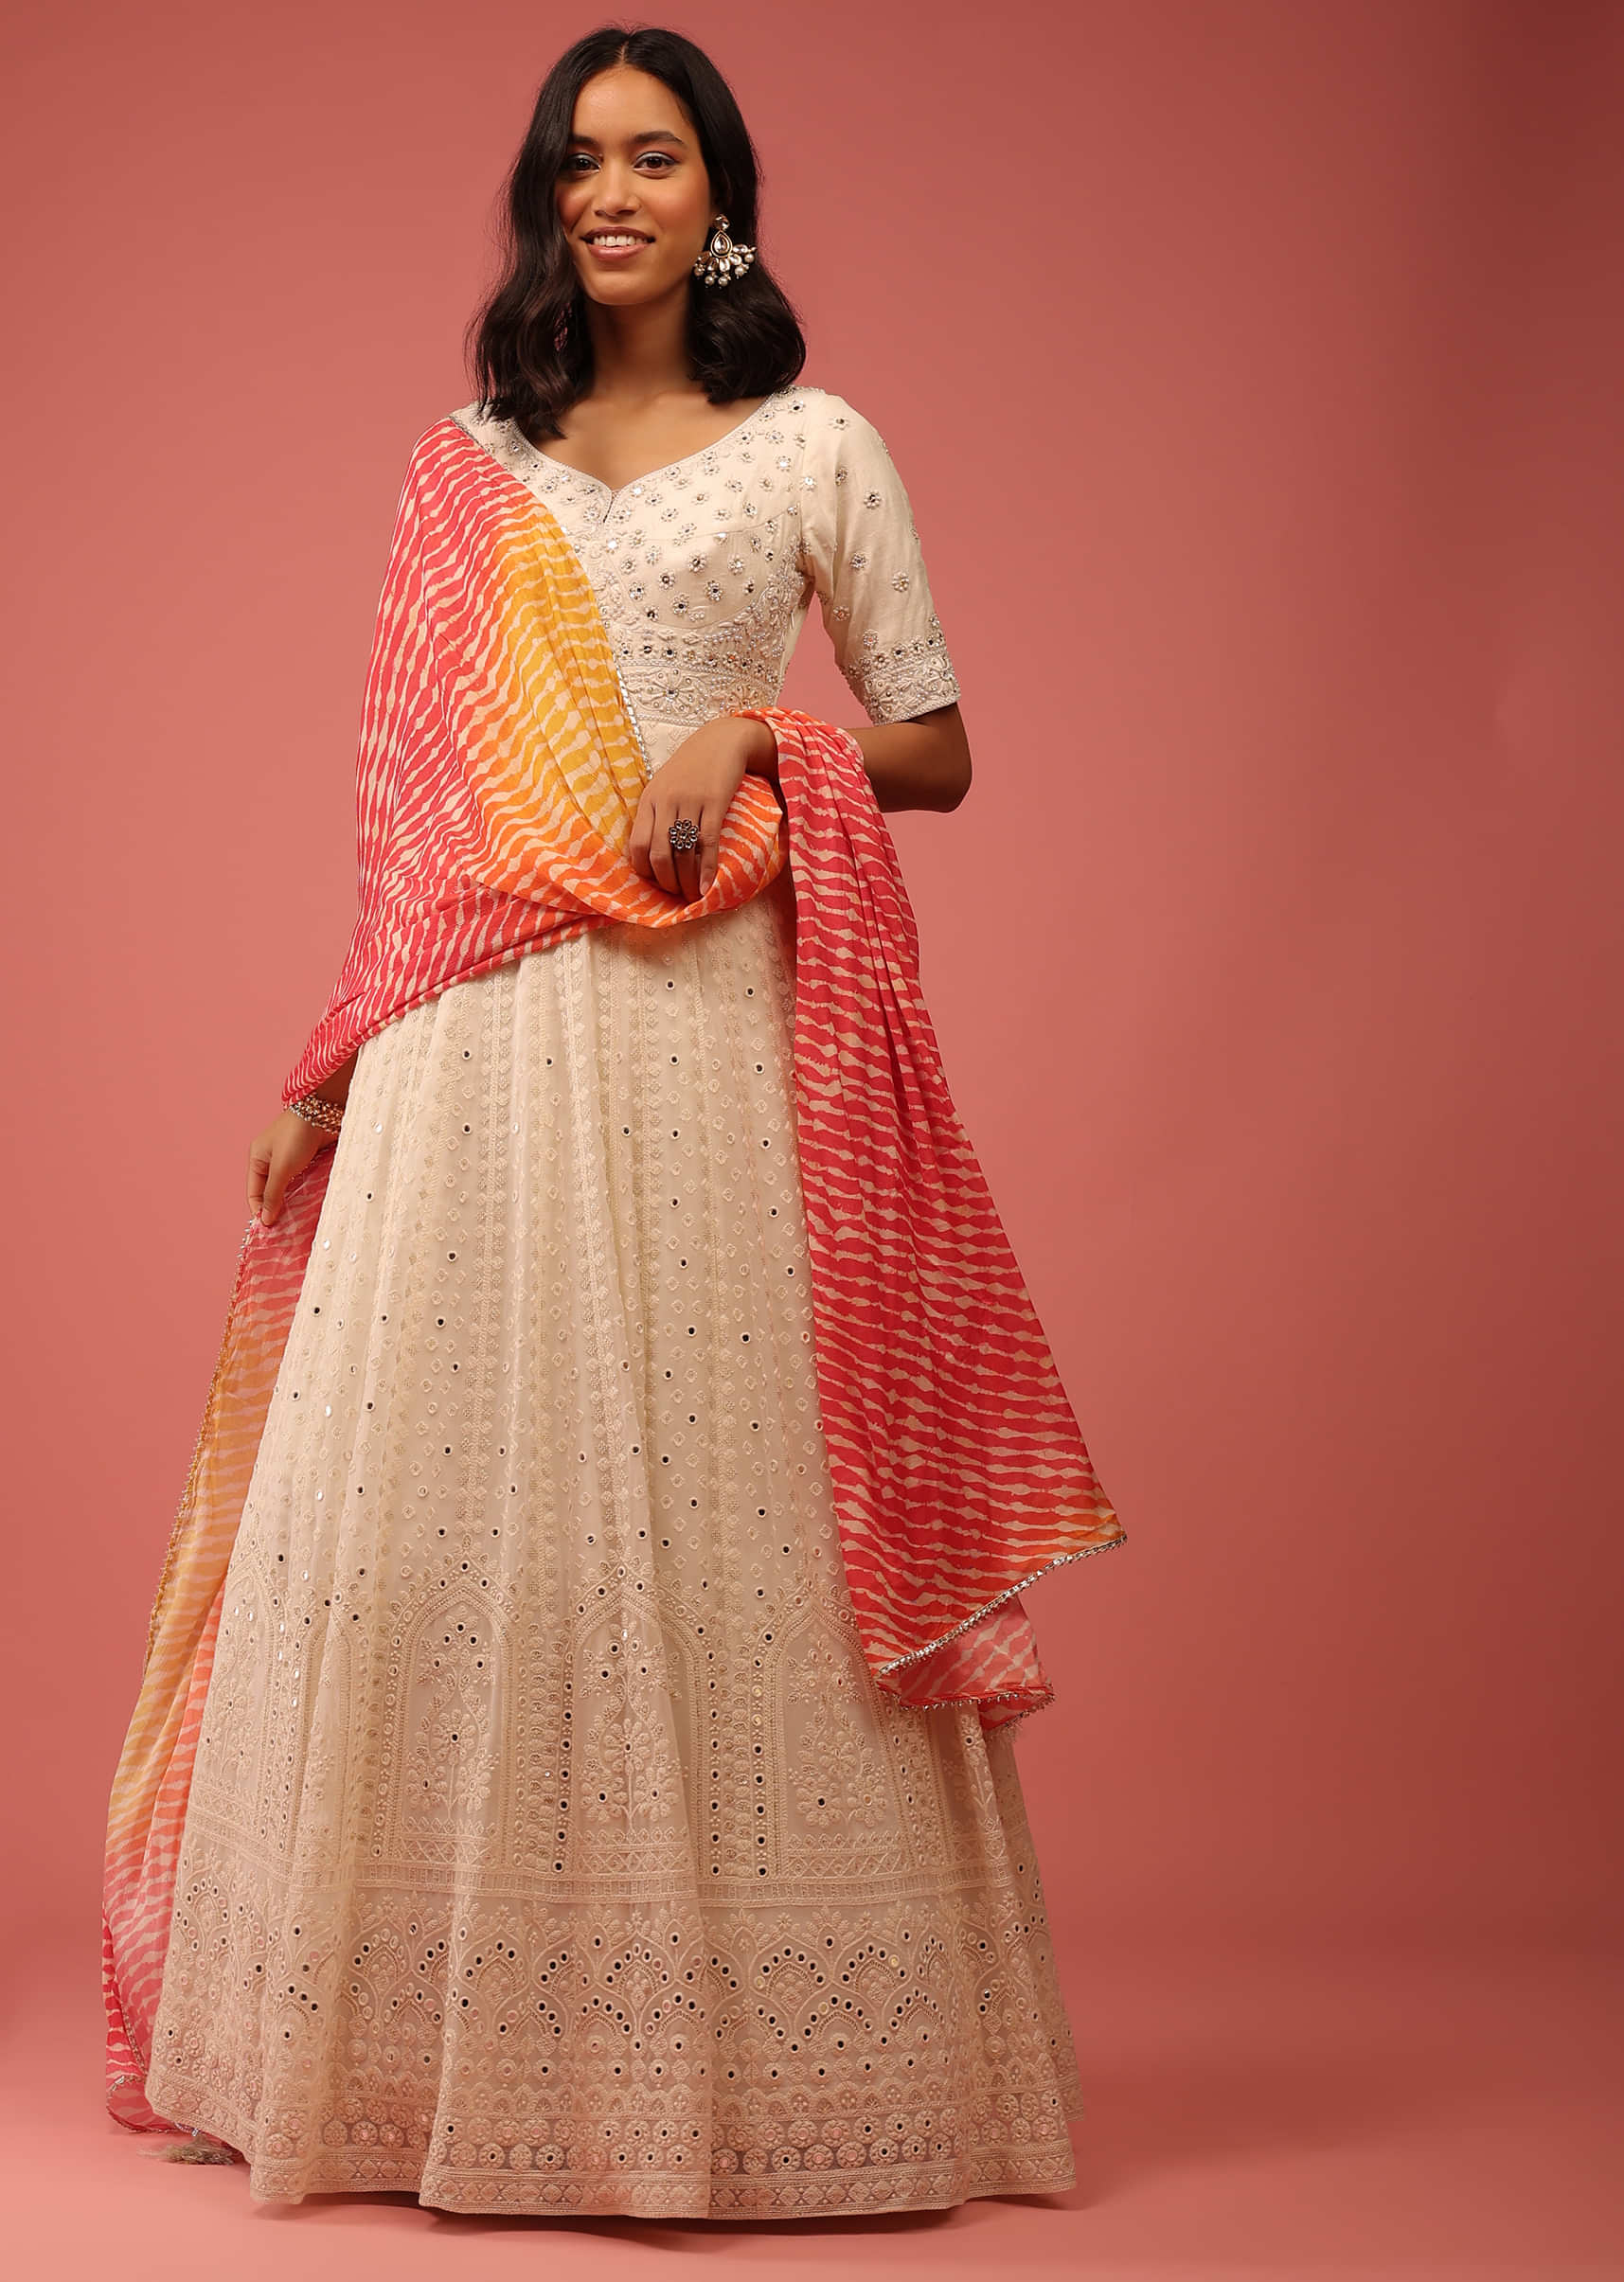 White Lukhnowi Anarkaili Dress Indian Pakistani Dress for Girl 